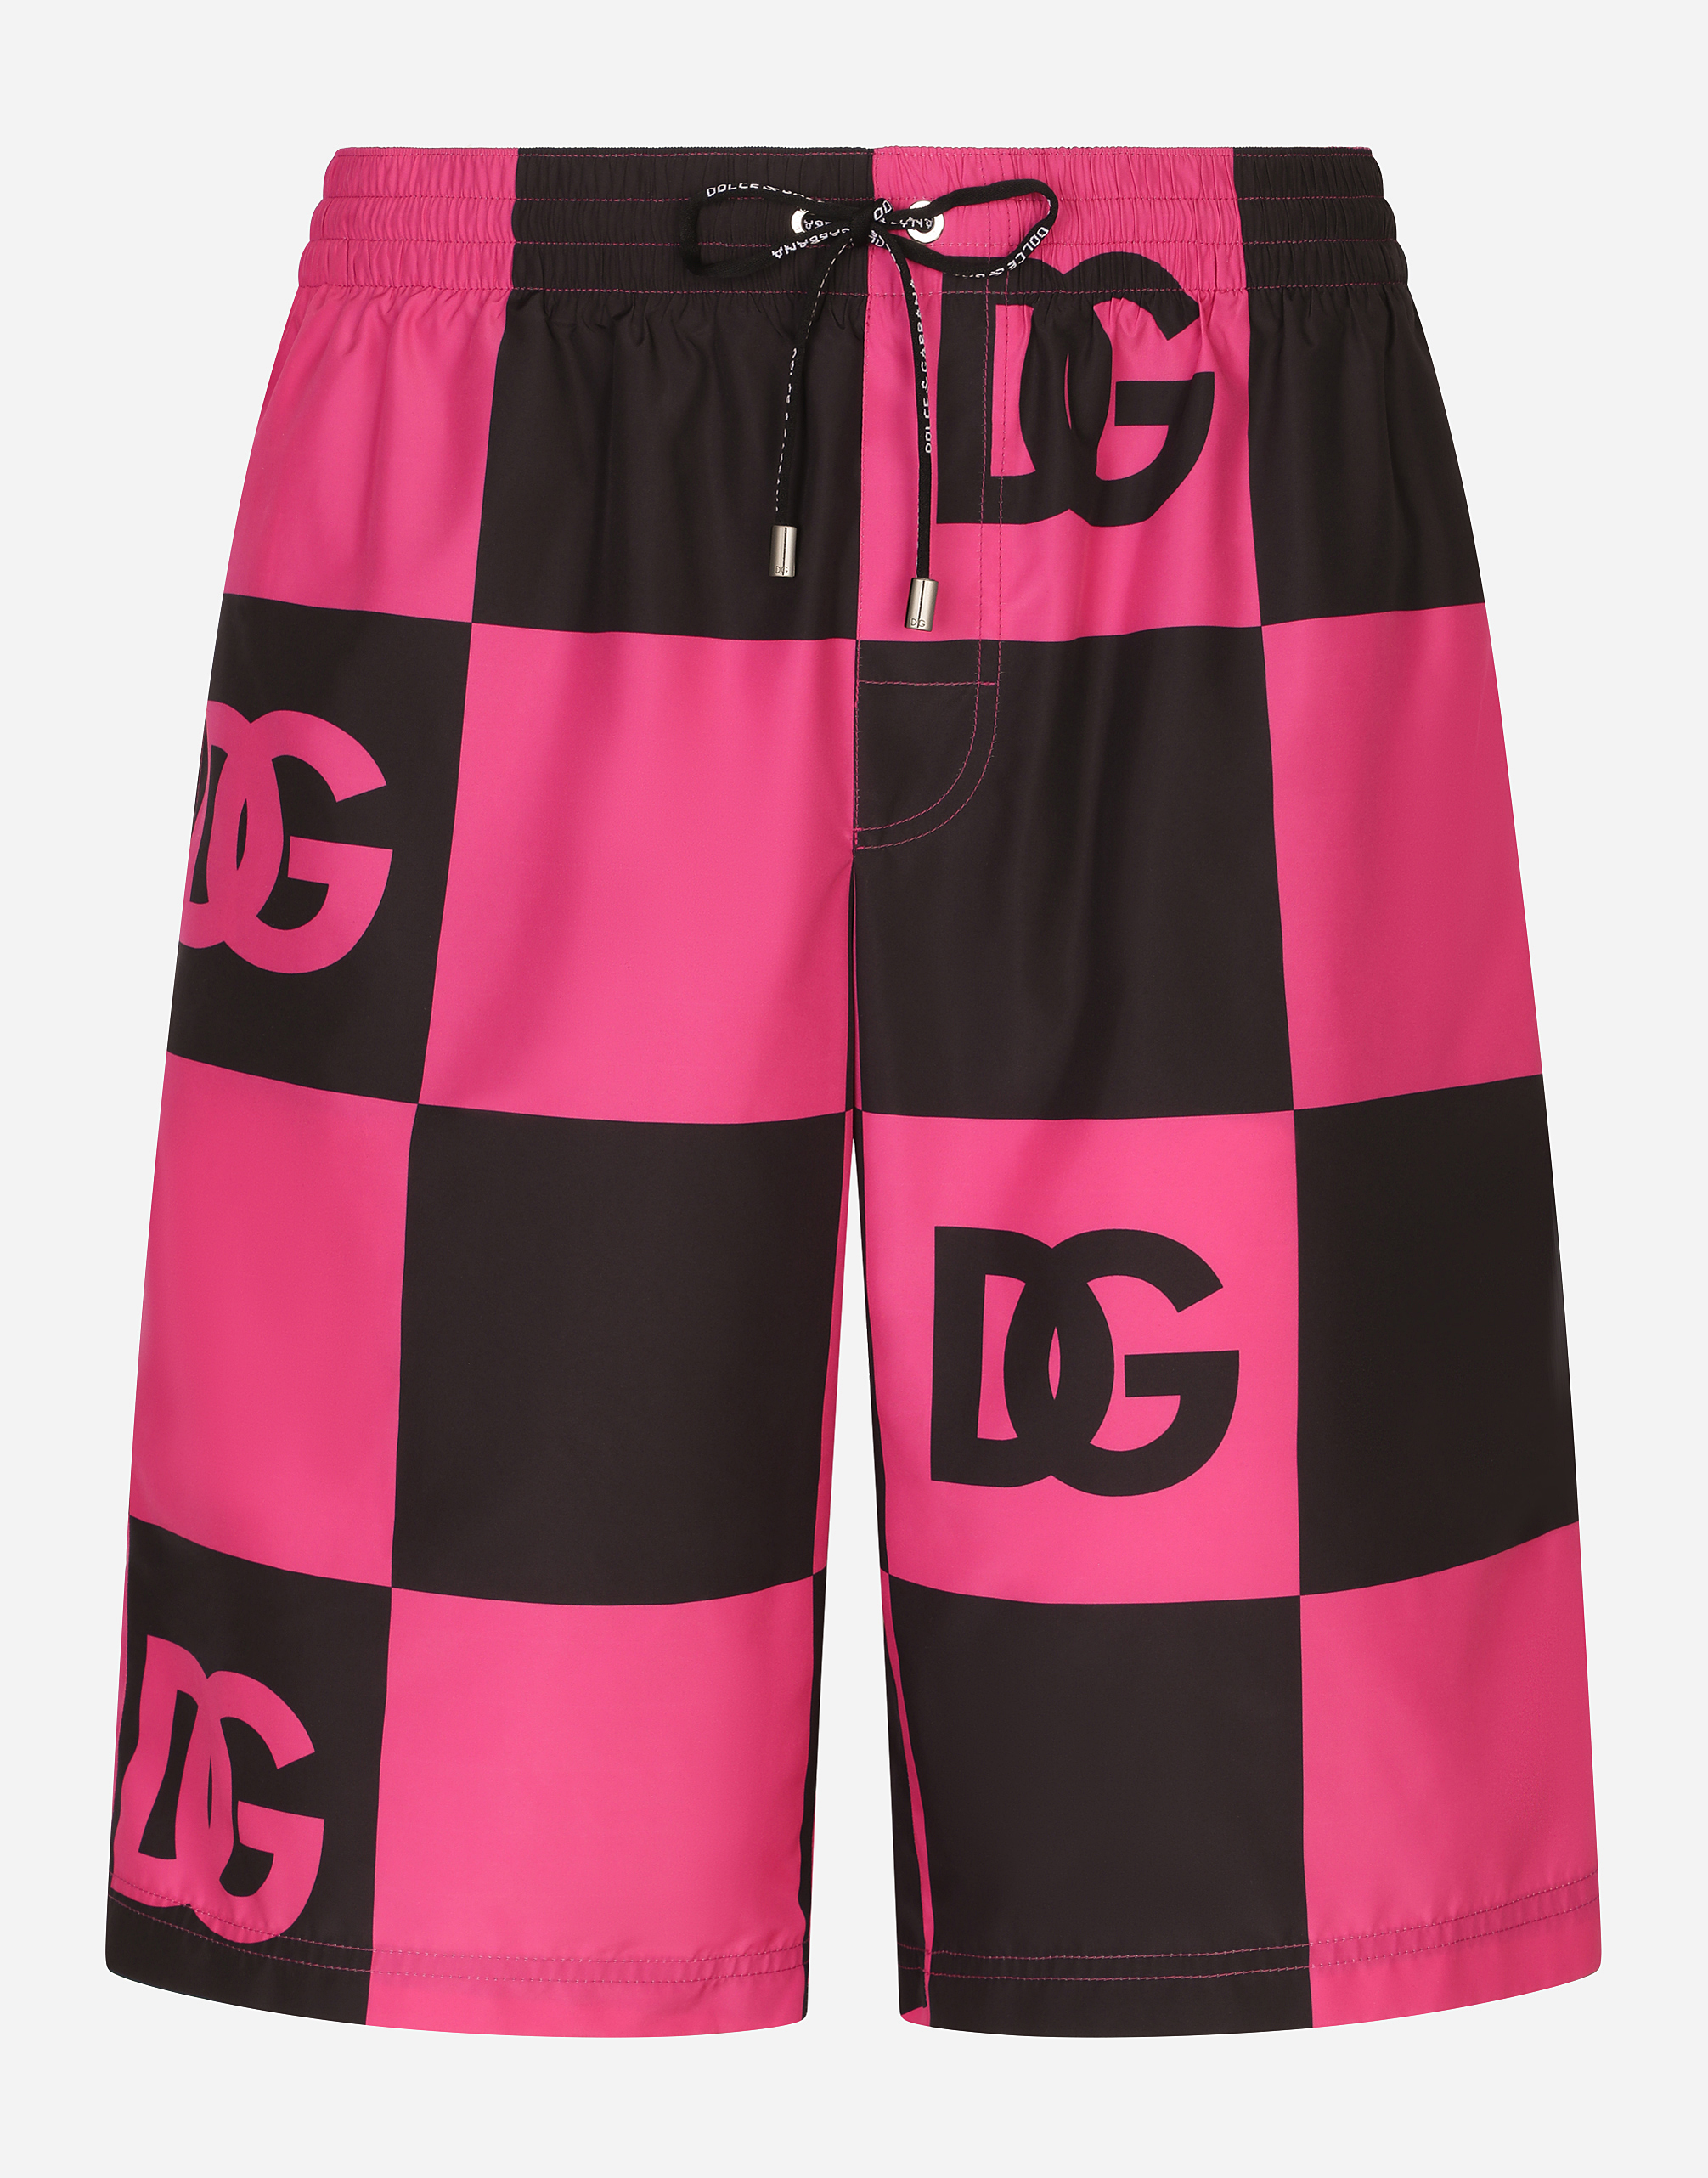 Long damier-print swim trunks with DG logo in Multicolor